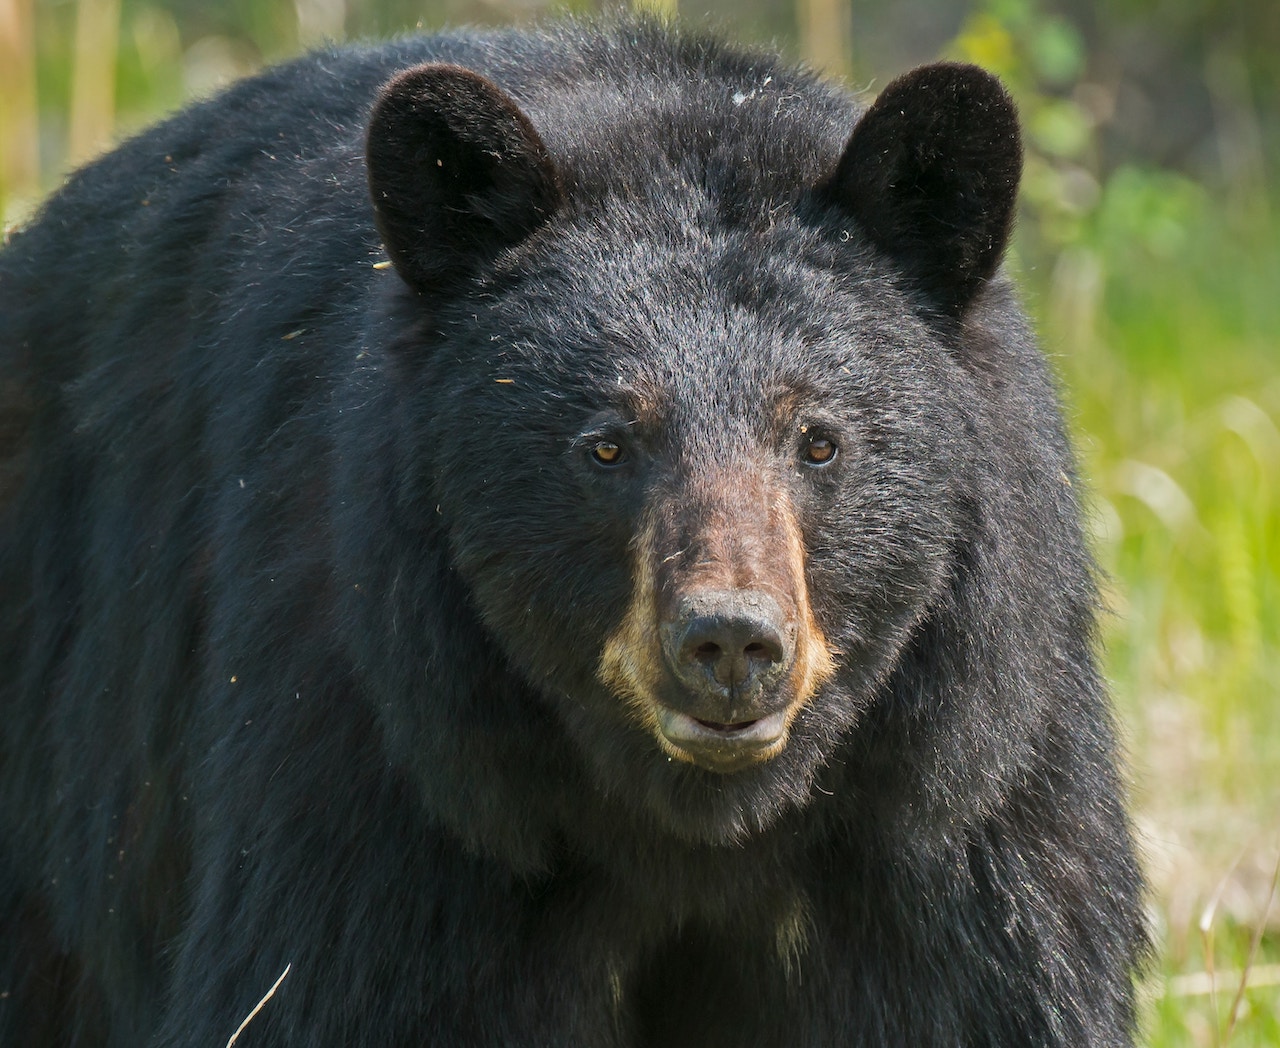 Bear Season Opens September 1 with Easier Hunter Reporting The